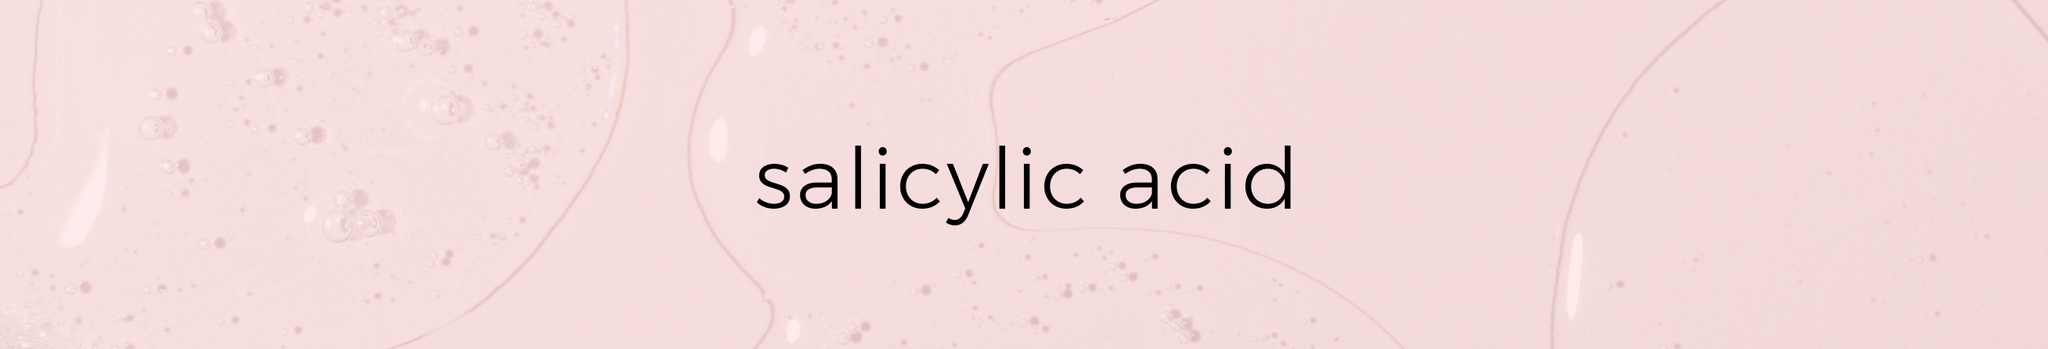 salicylic_acid